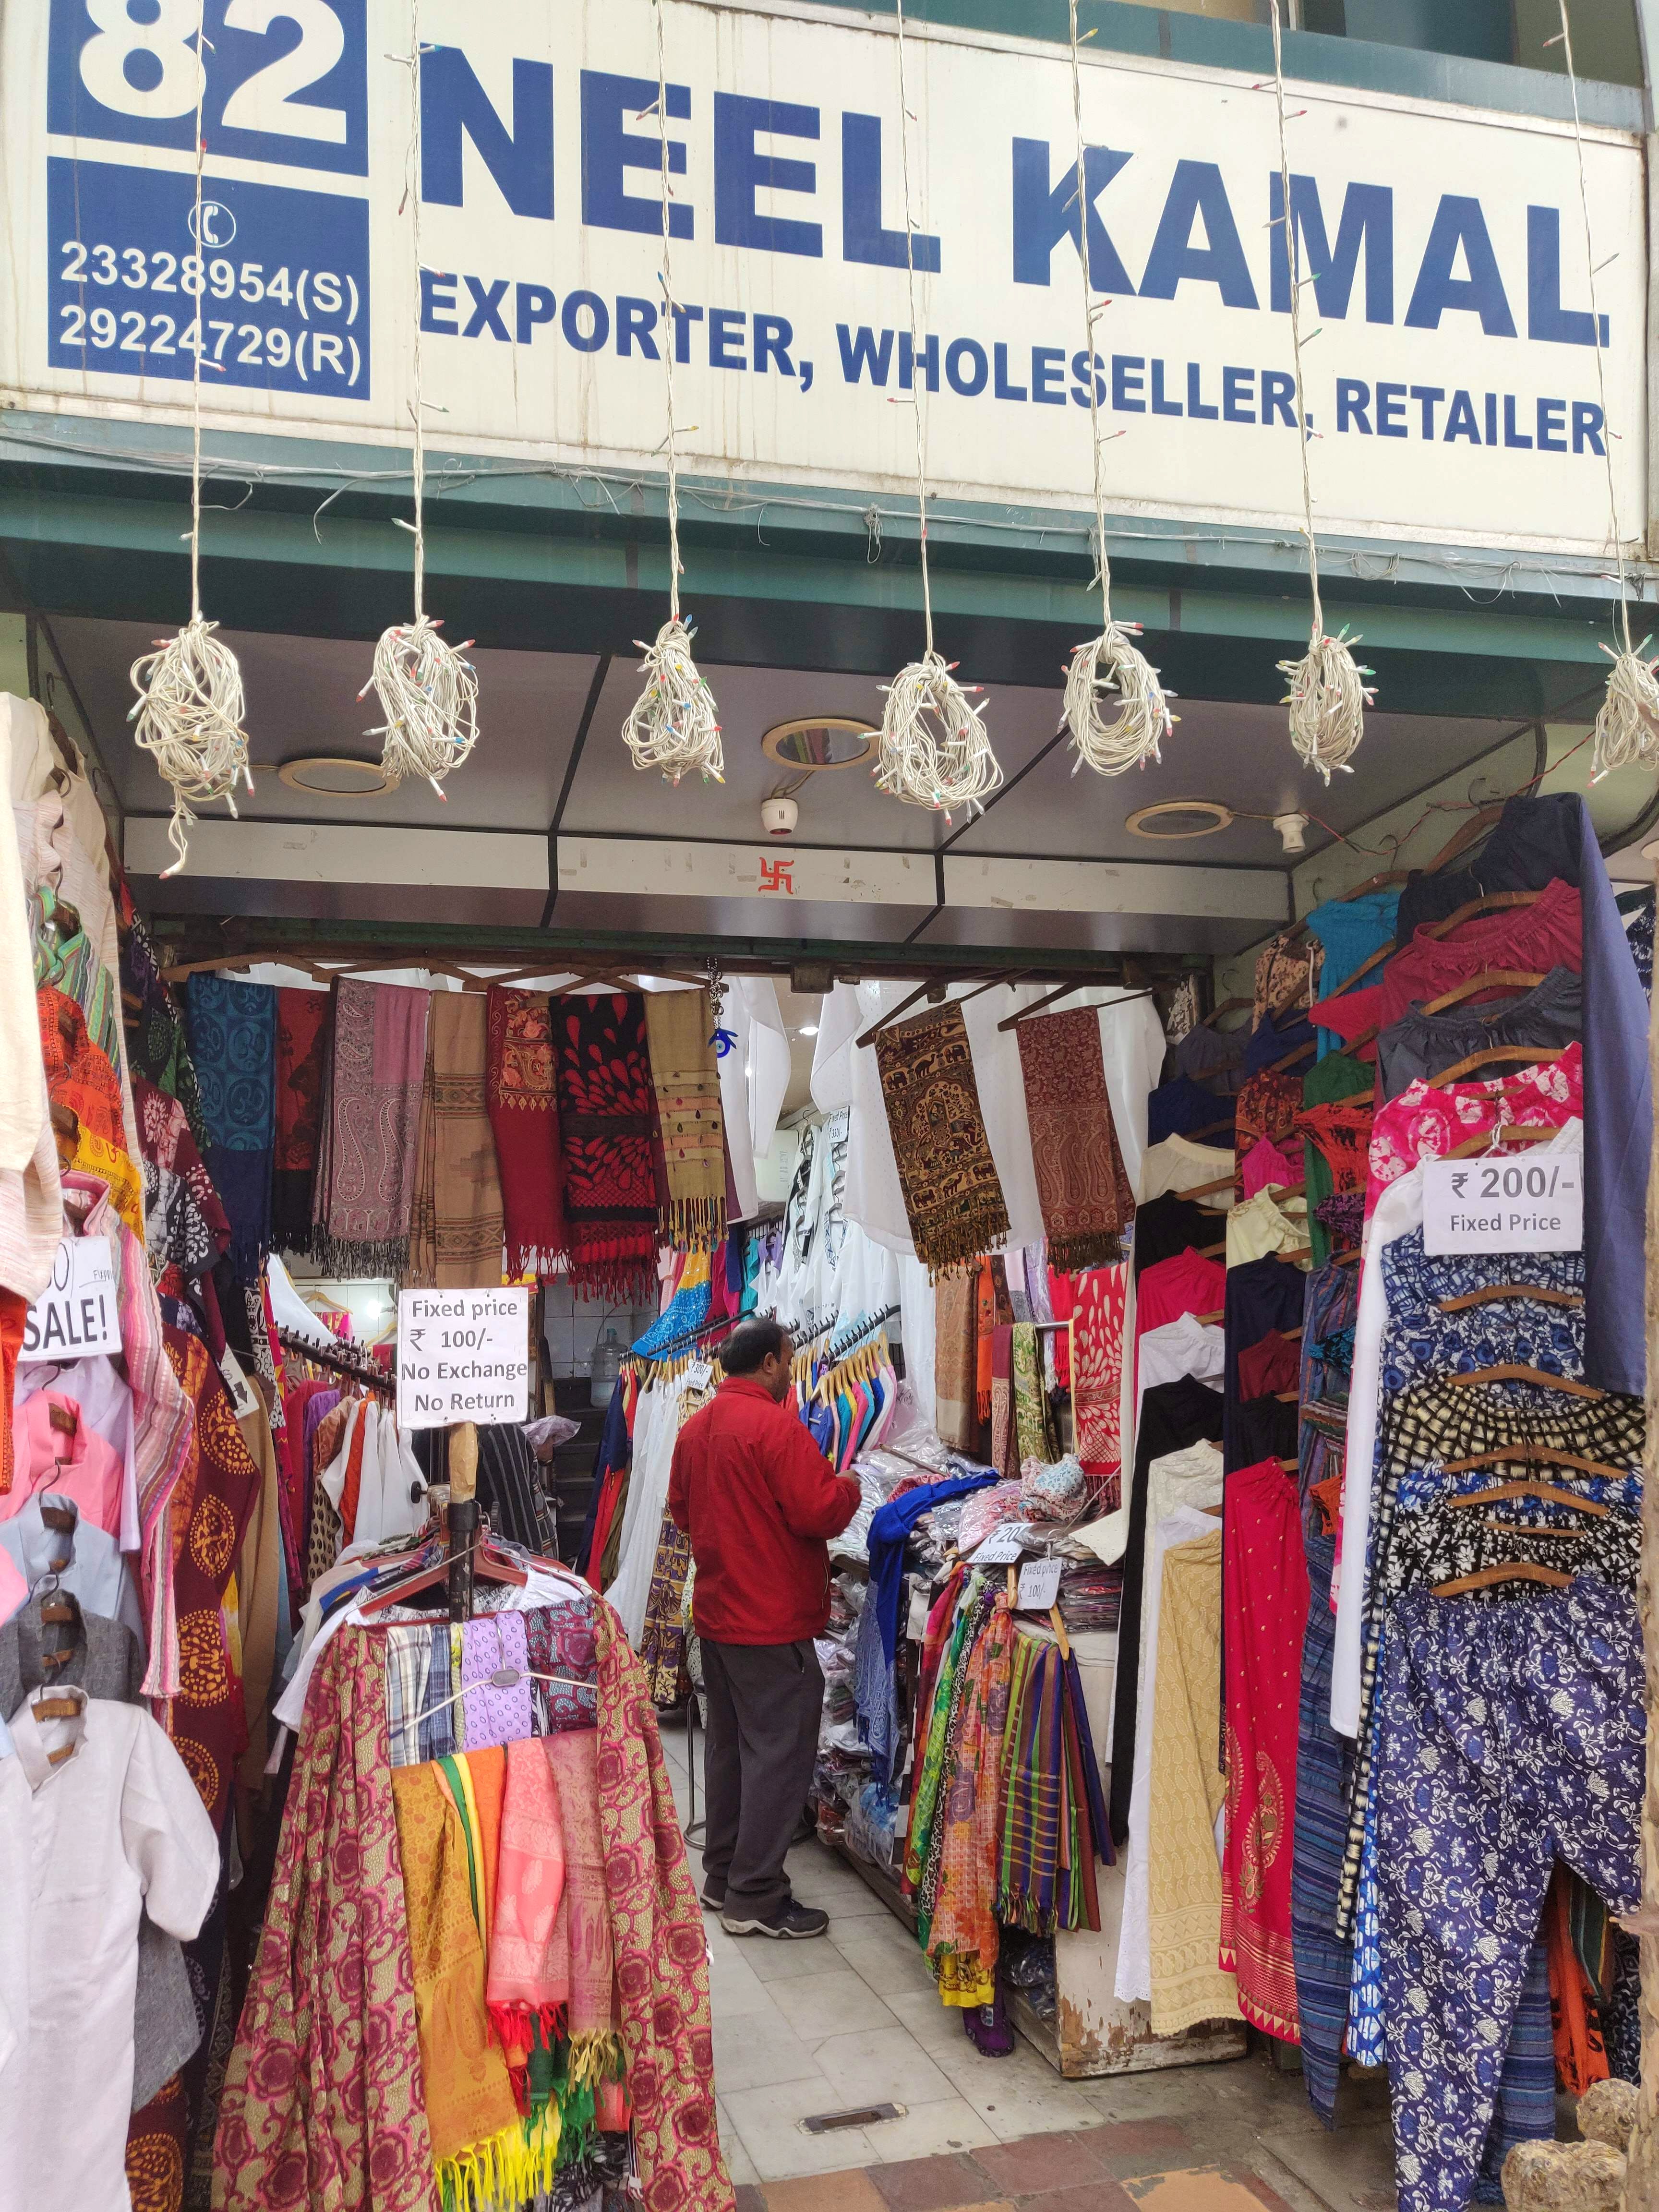 Selling,Bazaar,Marketplace,Boutique,Outlet store,Retail,Public space,Market,Building,Shopping